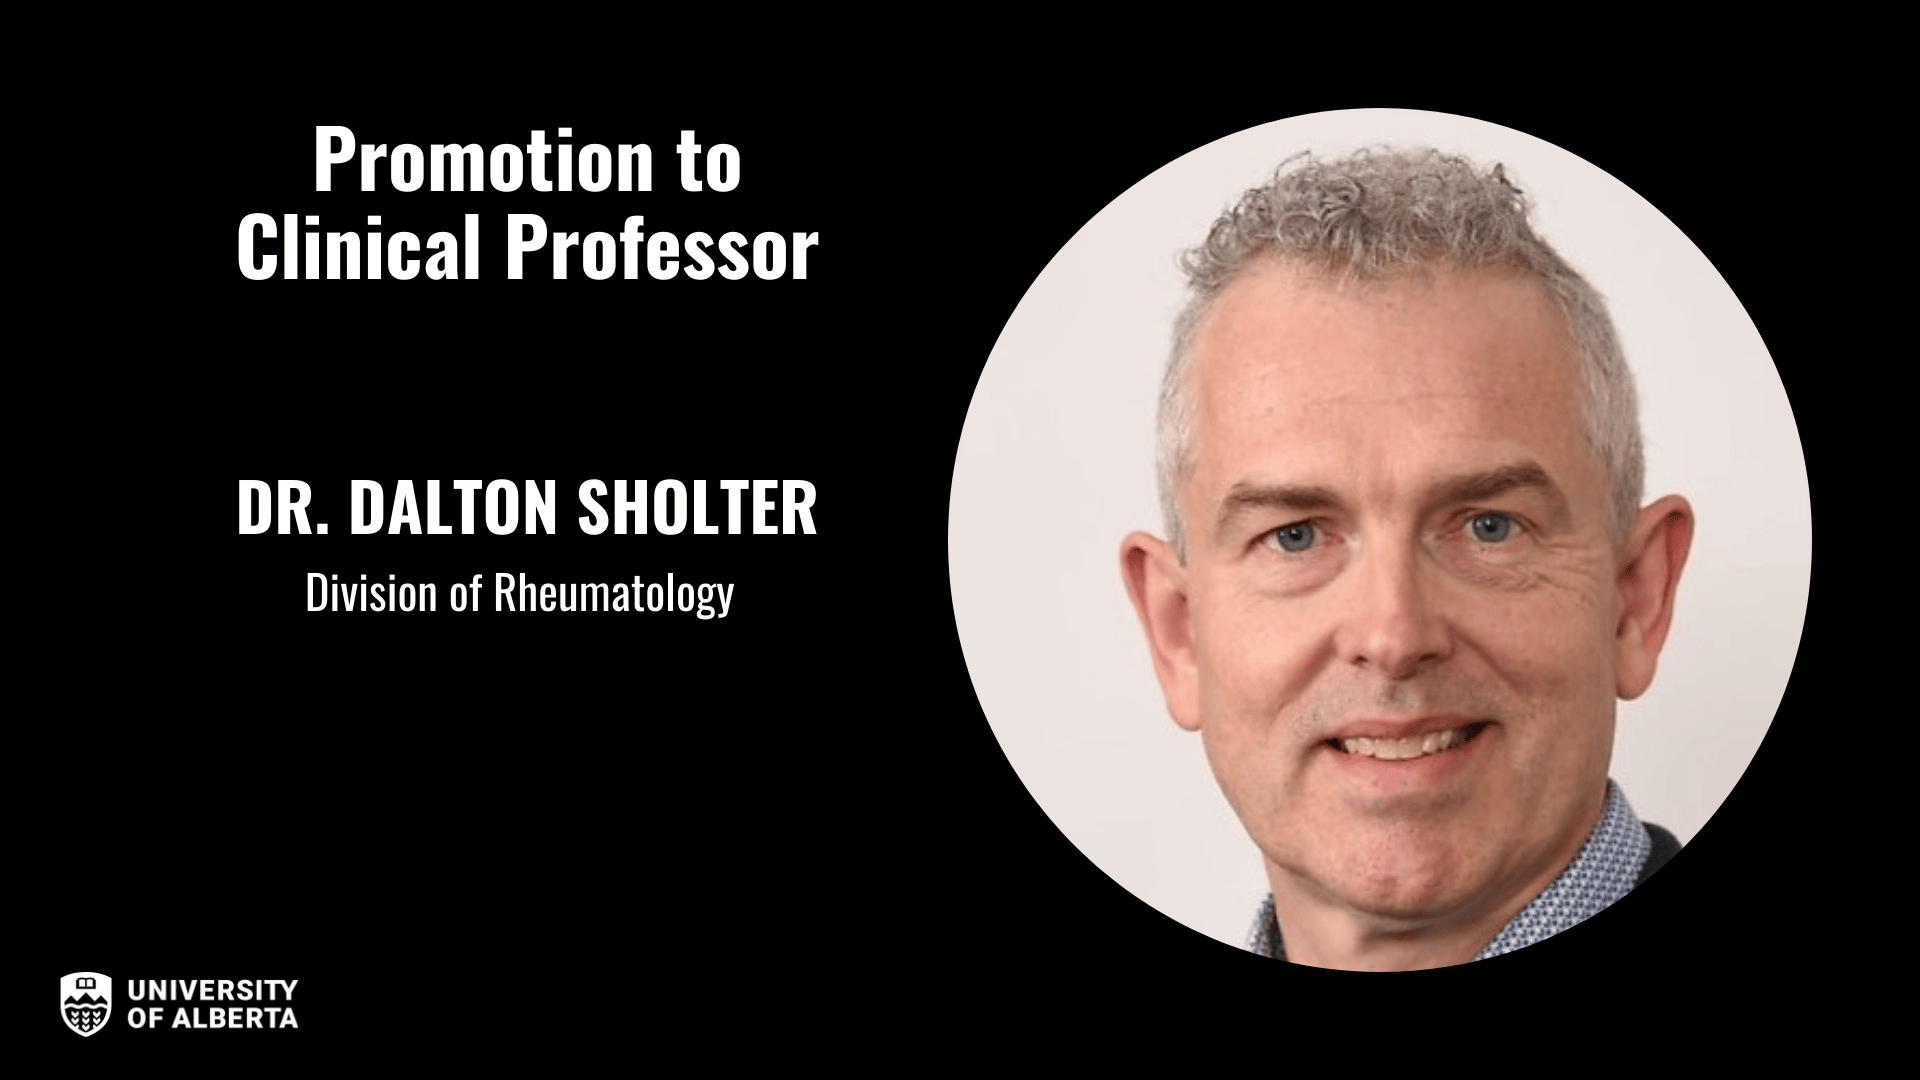 Dr. Dalton Sholter